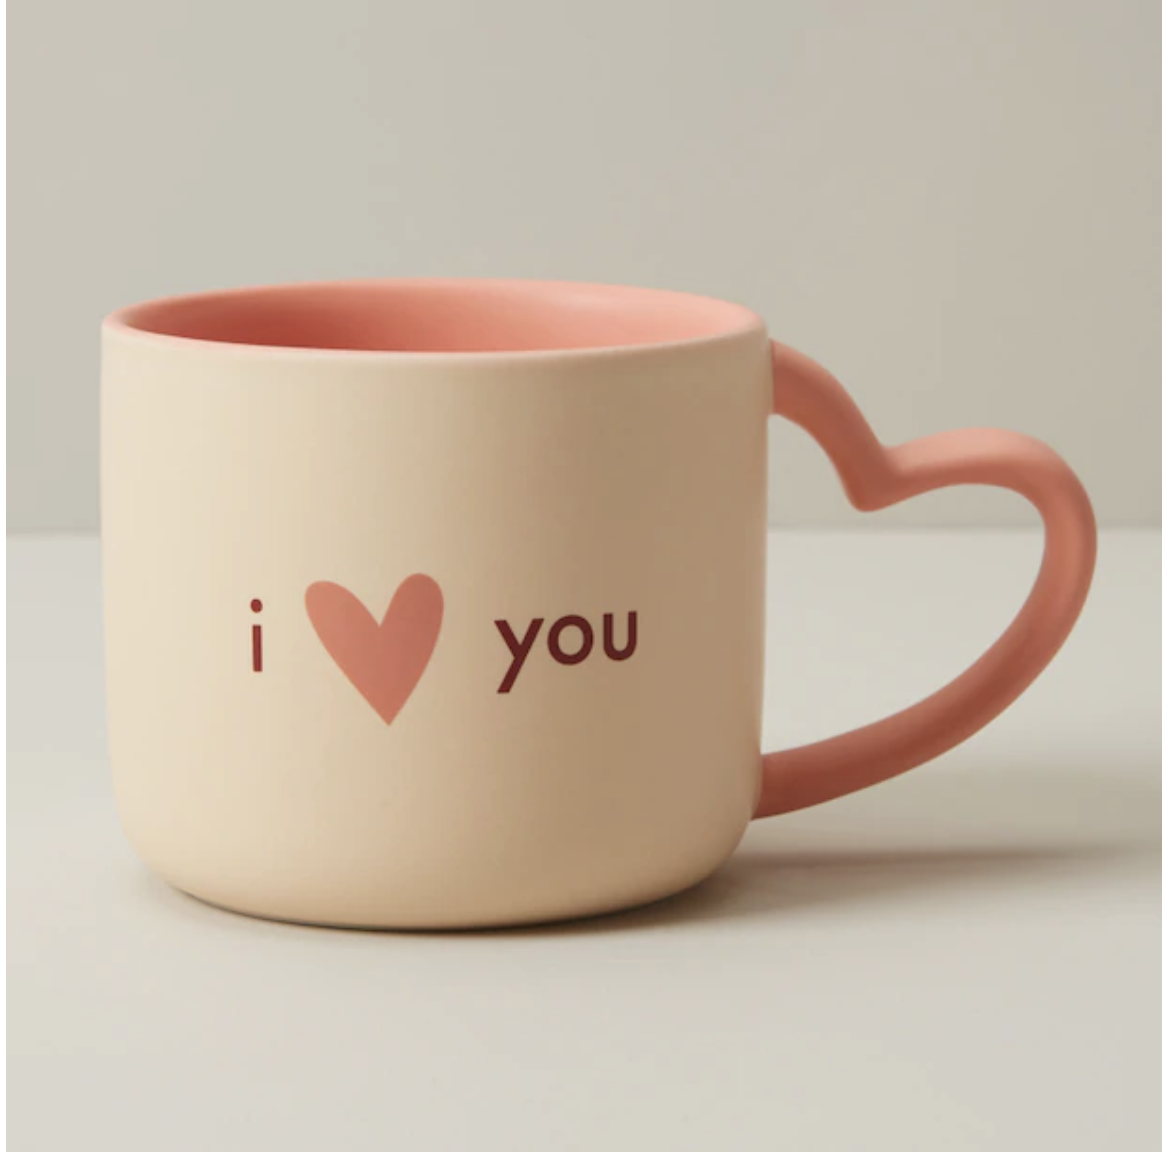 the mug that says I love you with a heart shaped handle